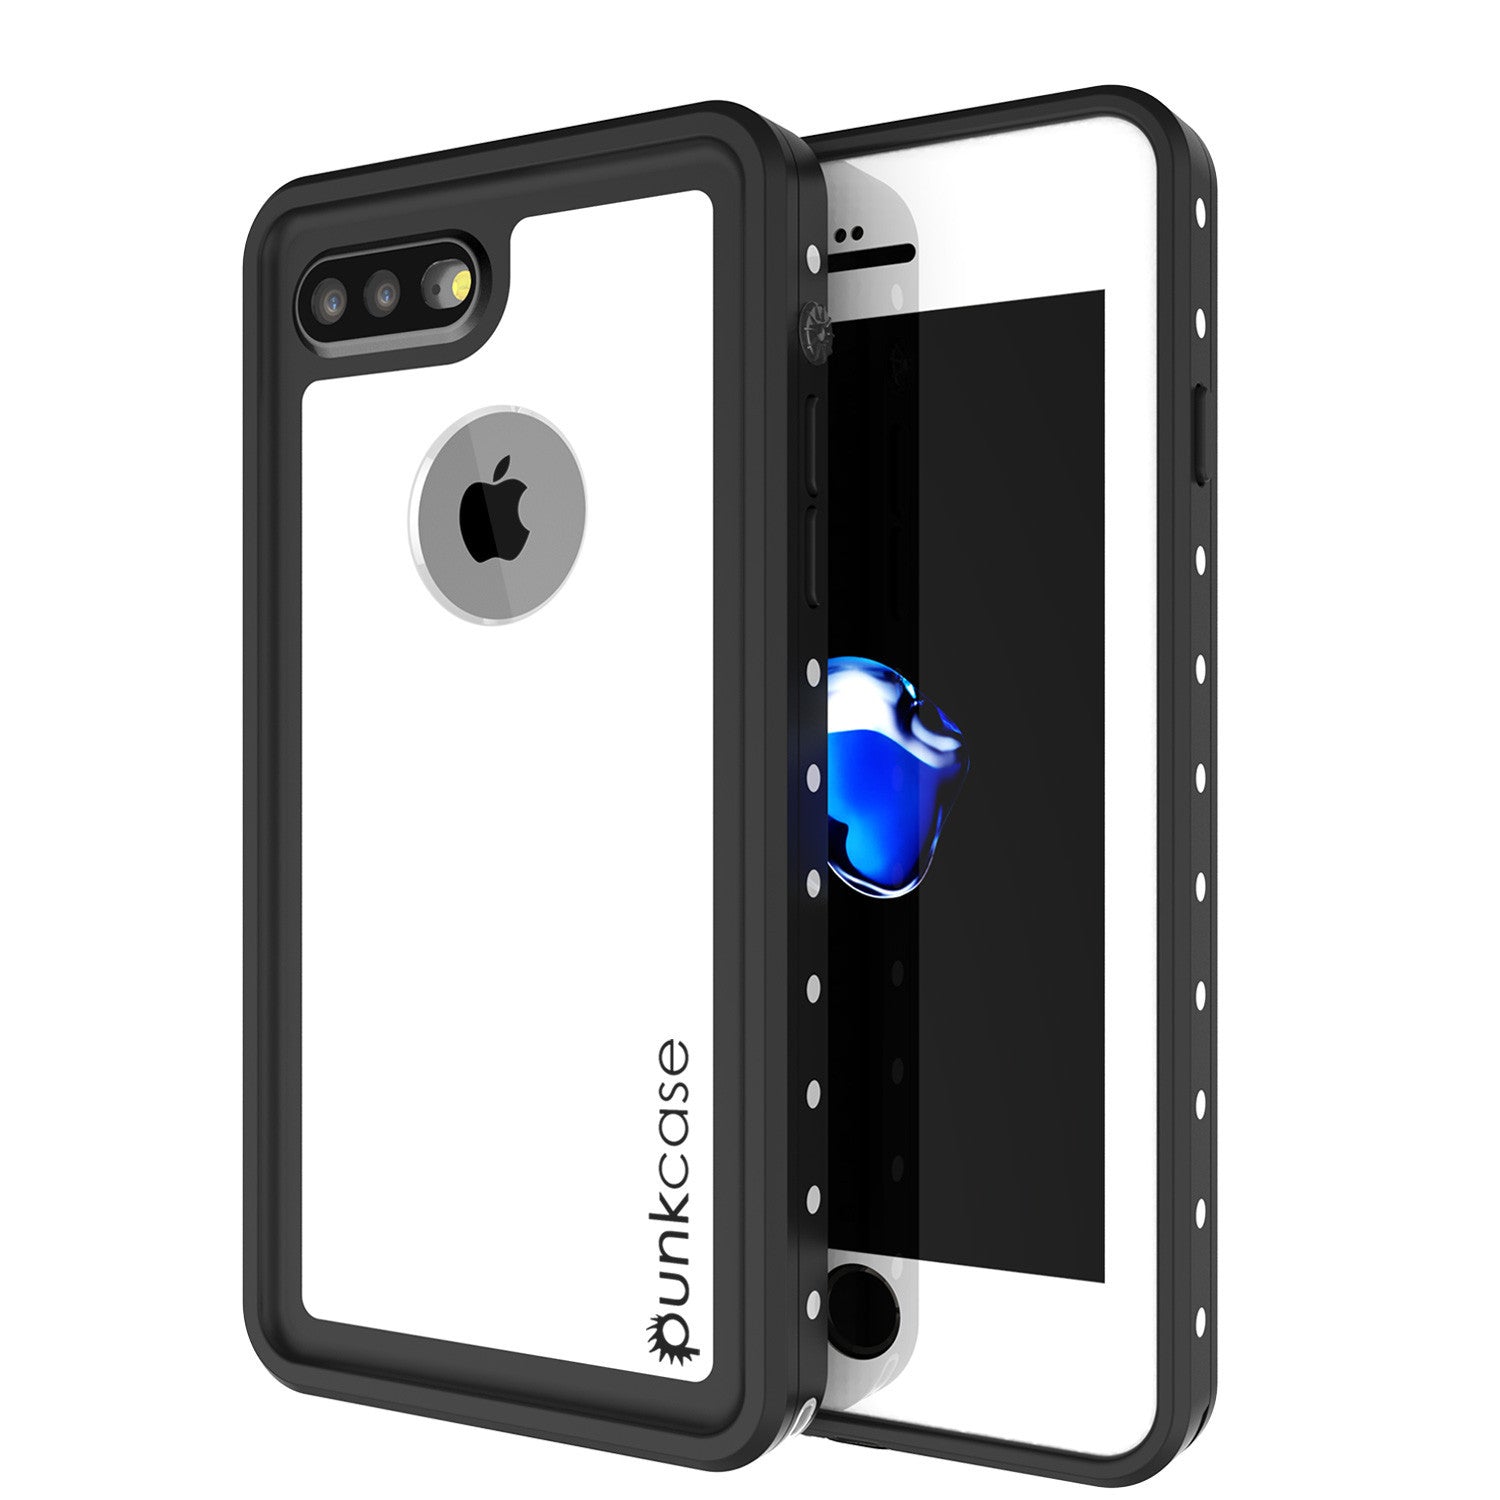 iPhone 8+ Plus Waterproof Case, Punkcase [StudStar Series] [White] [Slim Fit] [Shockproof] [Dirtproof] [Snowproof] Armor Cover (Color in image: white)